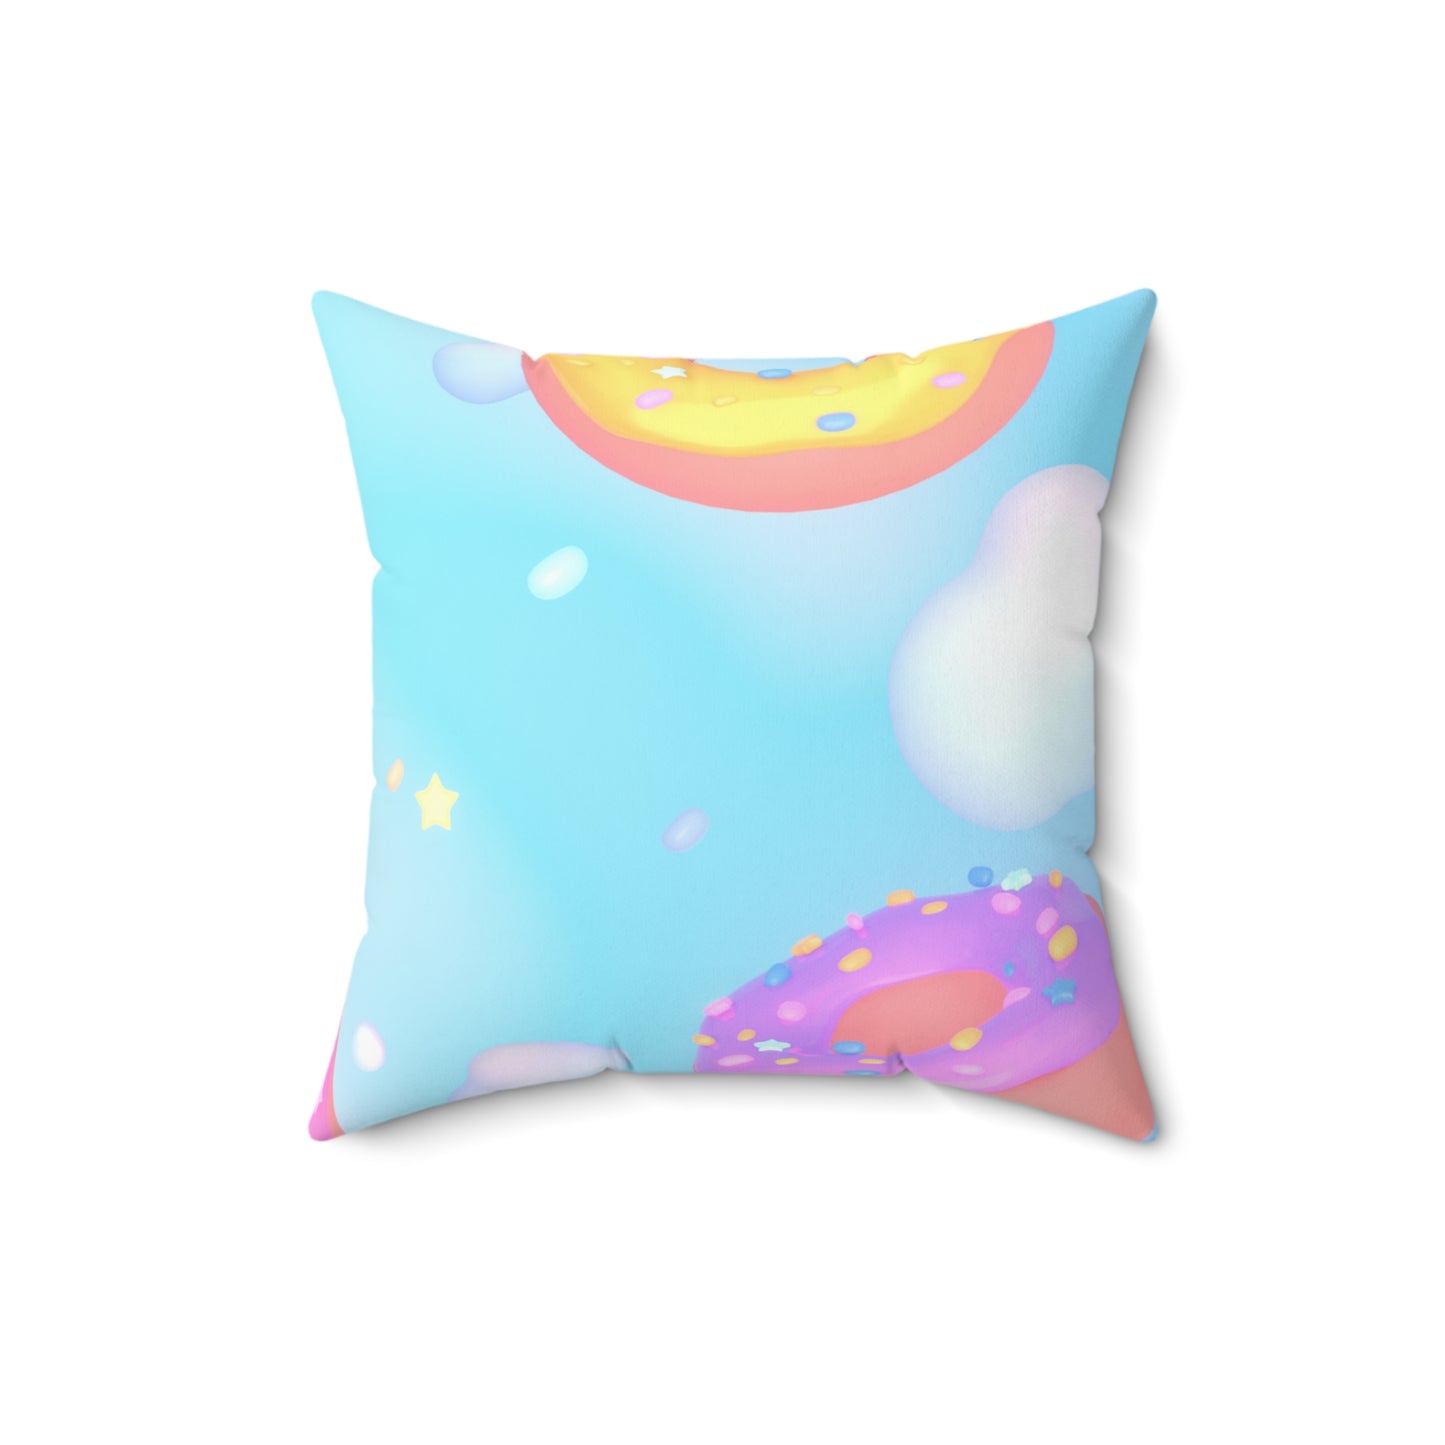 Sweet Donut Paradise Square Pillow